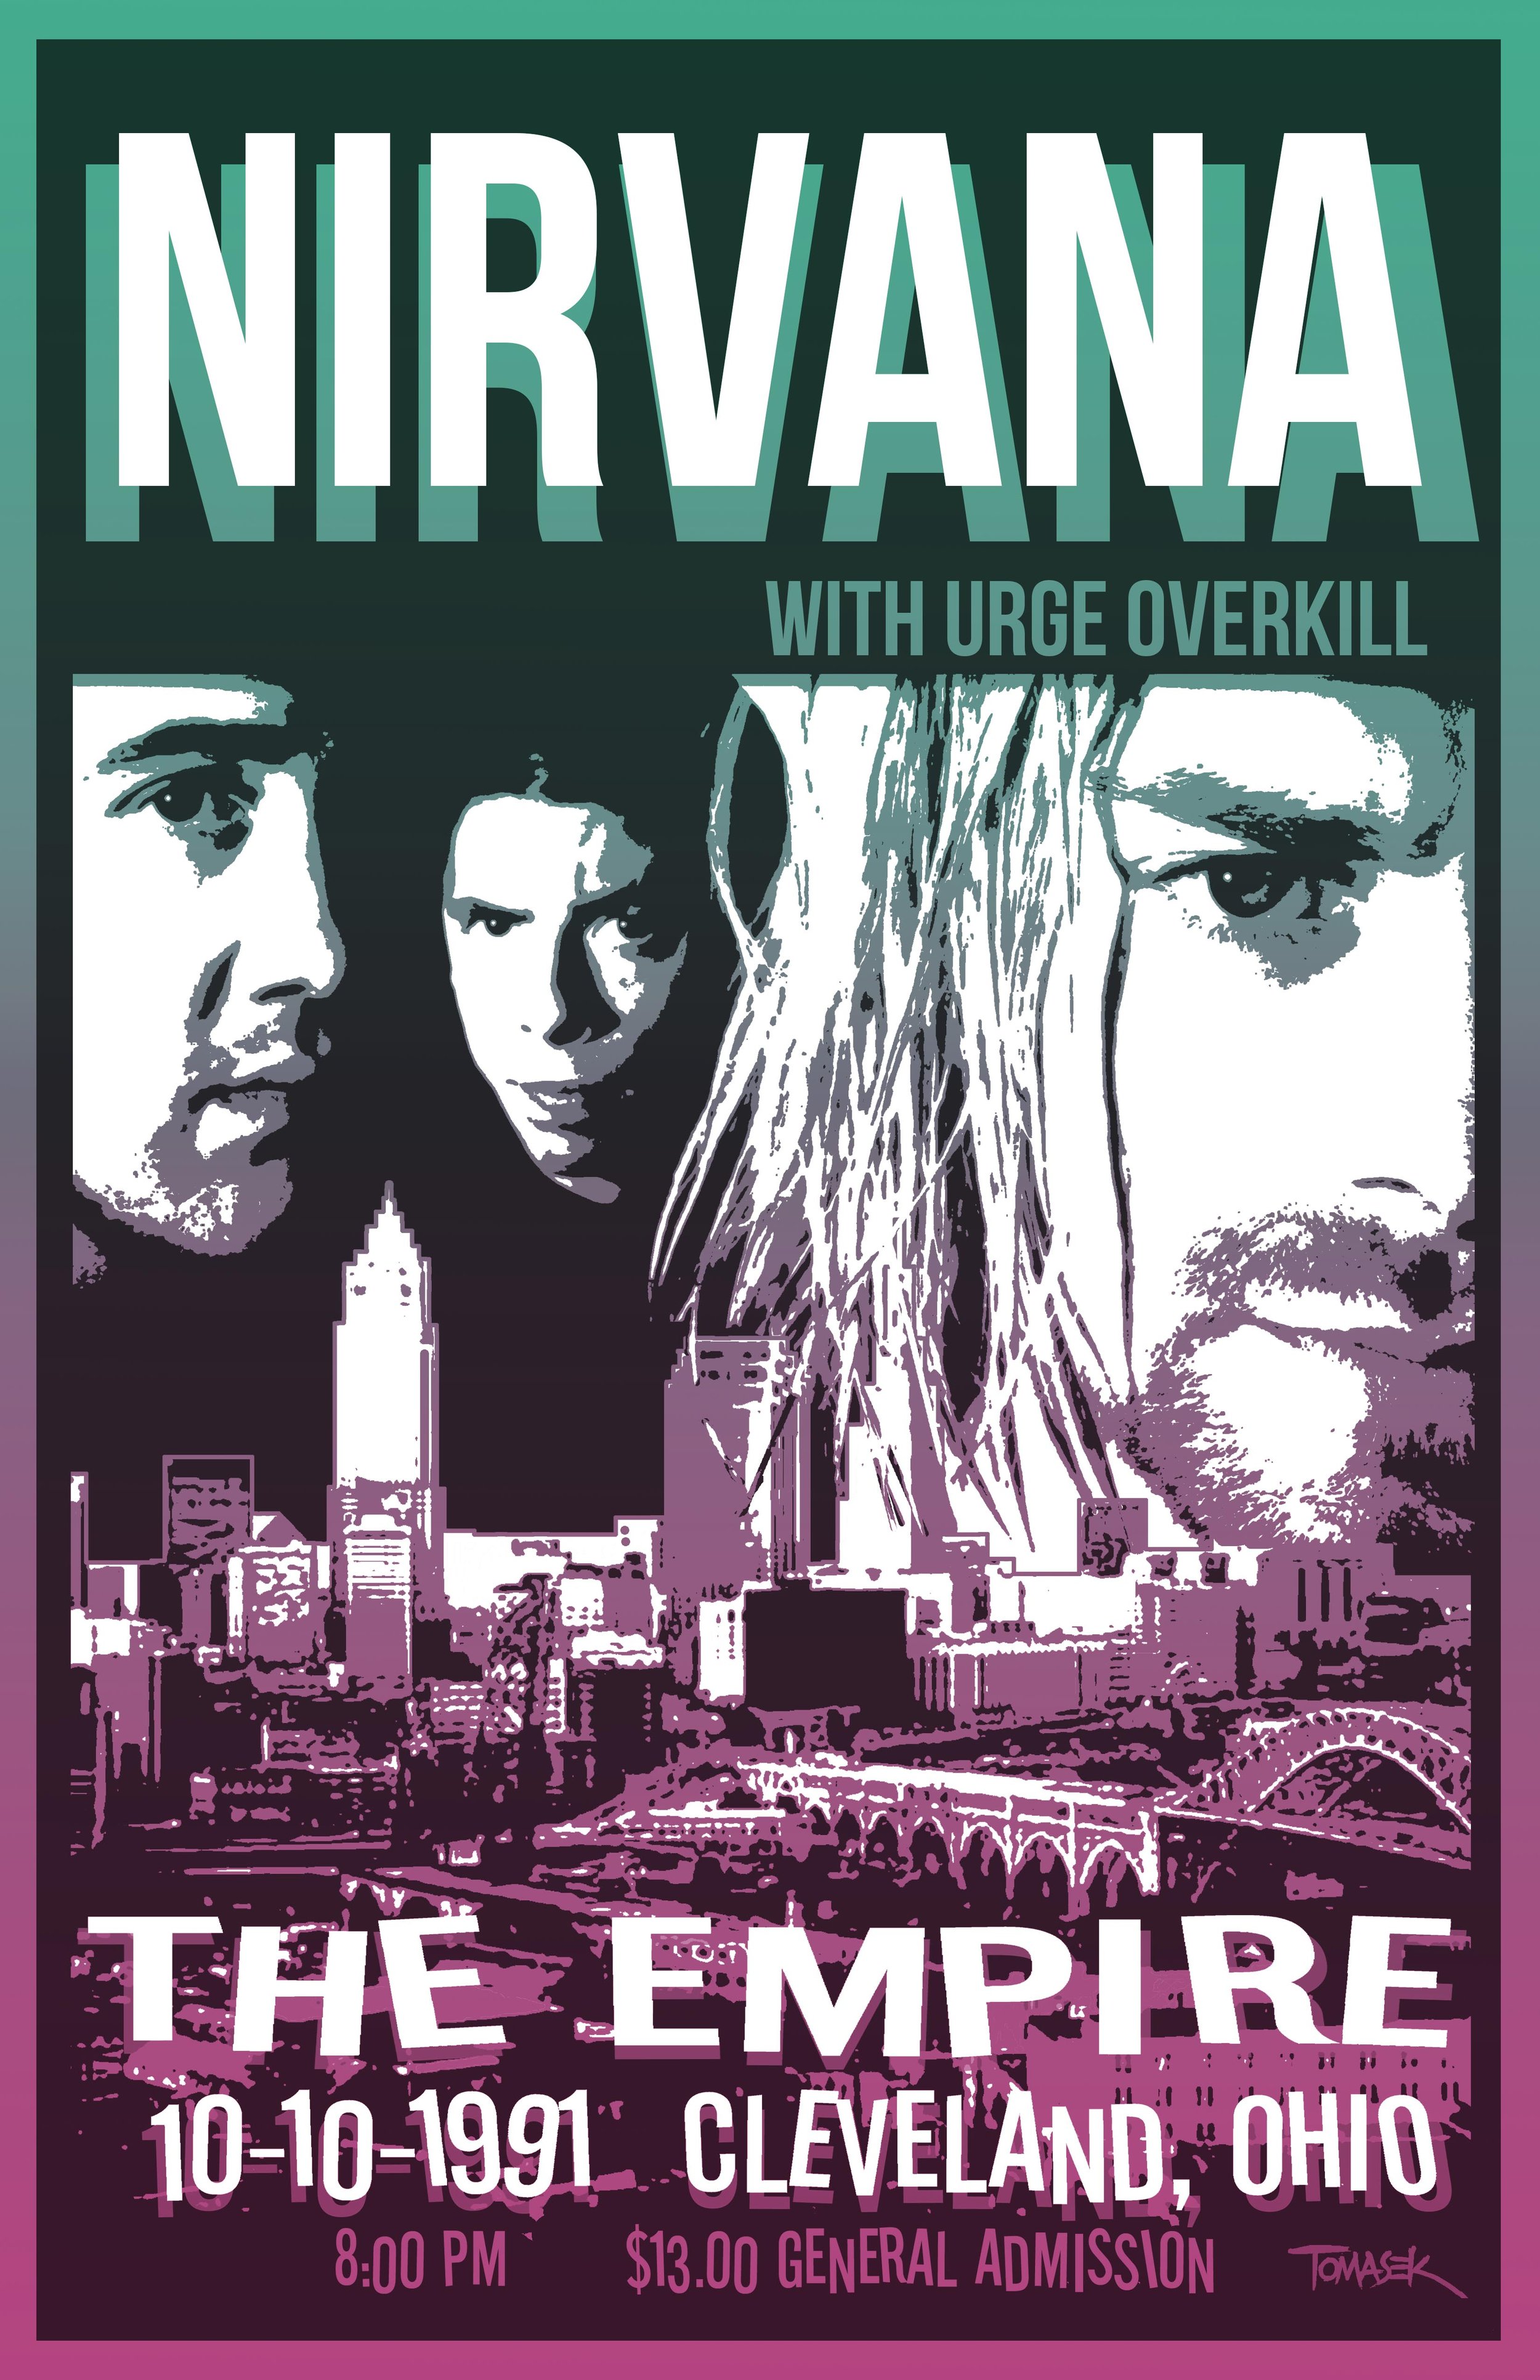 nirvana cover band tour